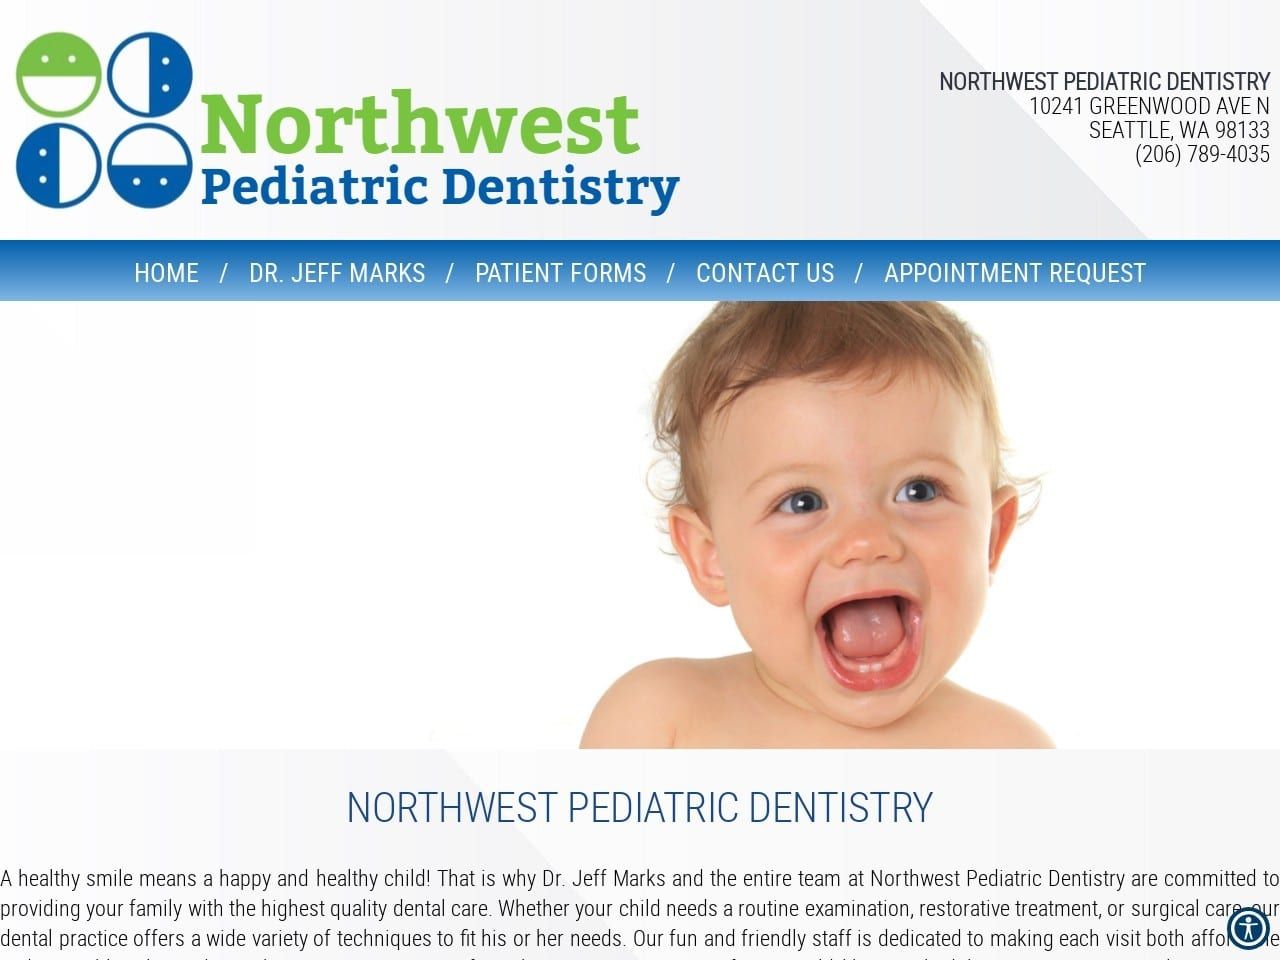 N W Pediatric Dentist Website Screenshot from northwestpediatricdentistry.com